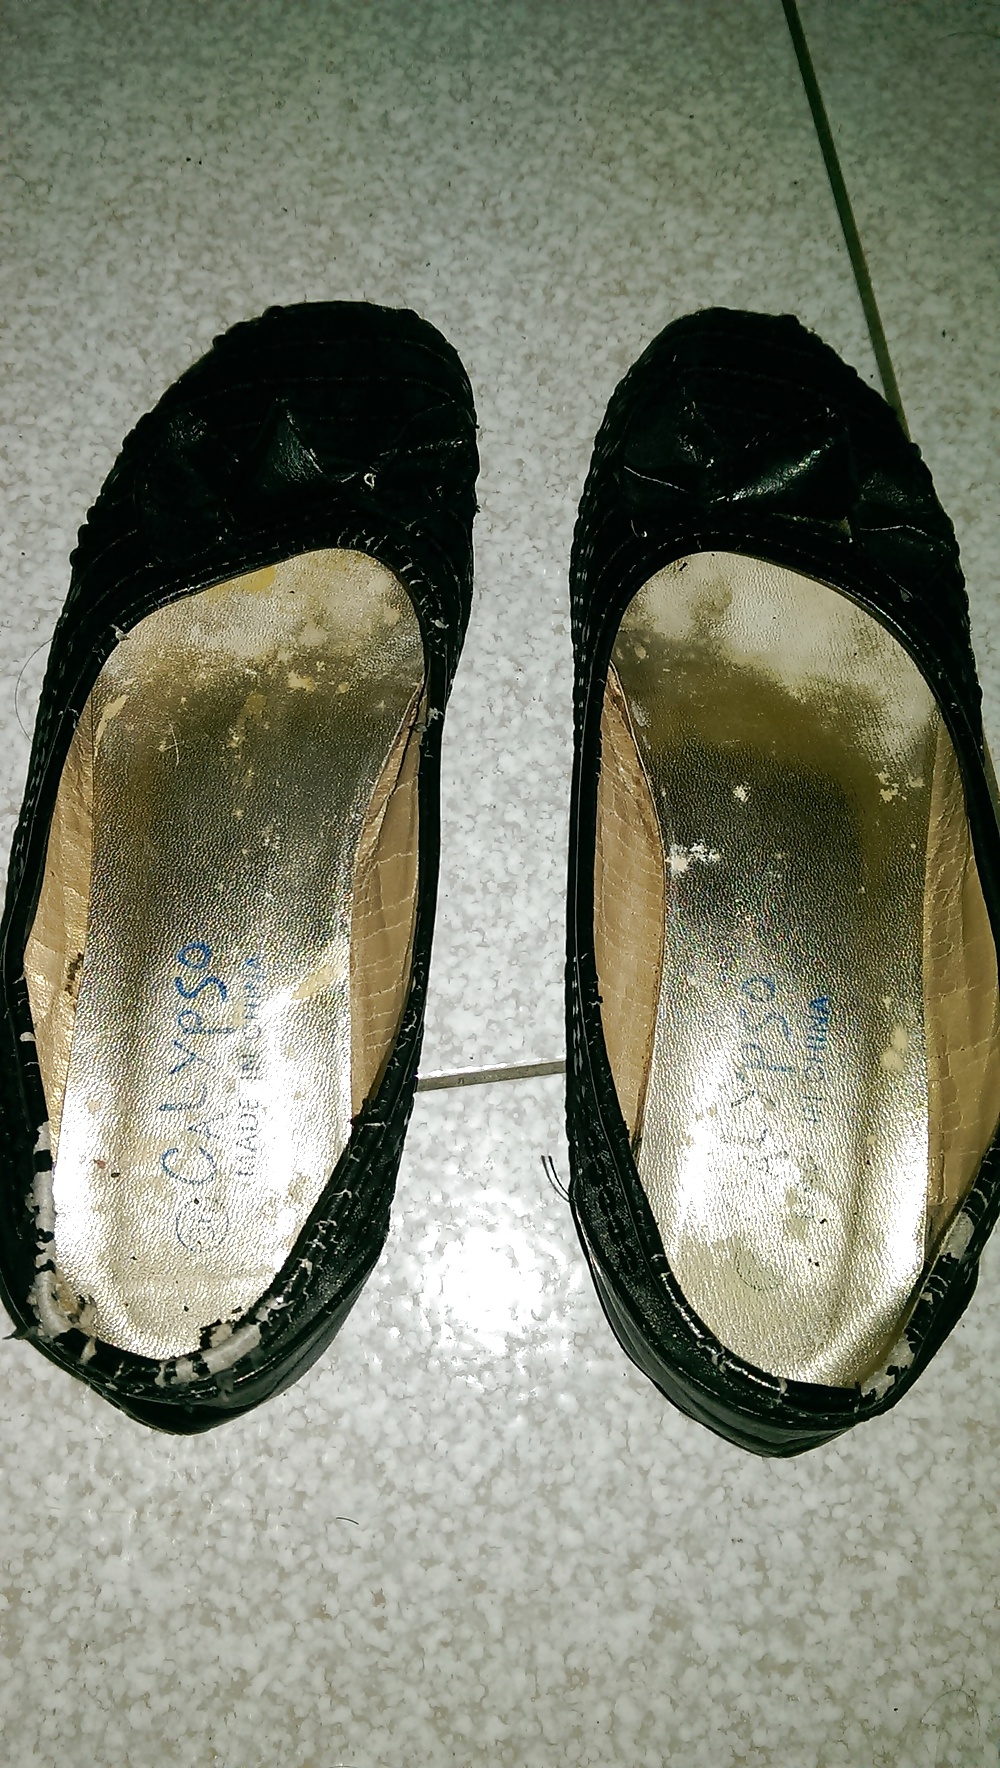 Borrowed heel and ballerina from my colleague #34561256